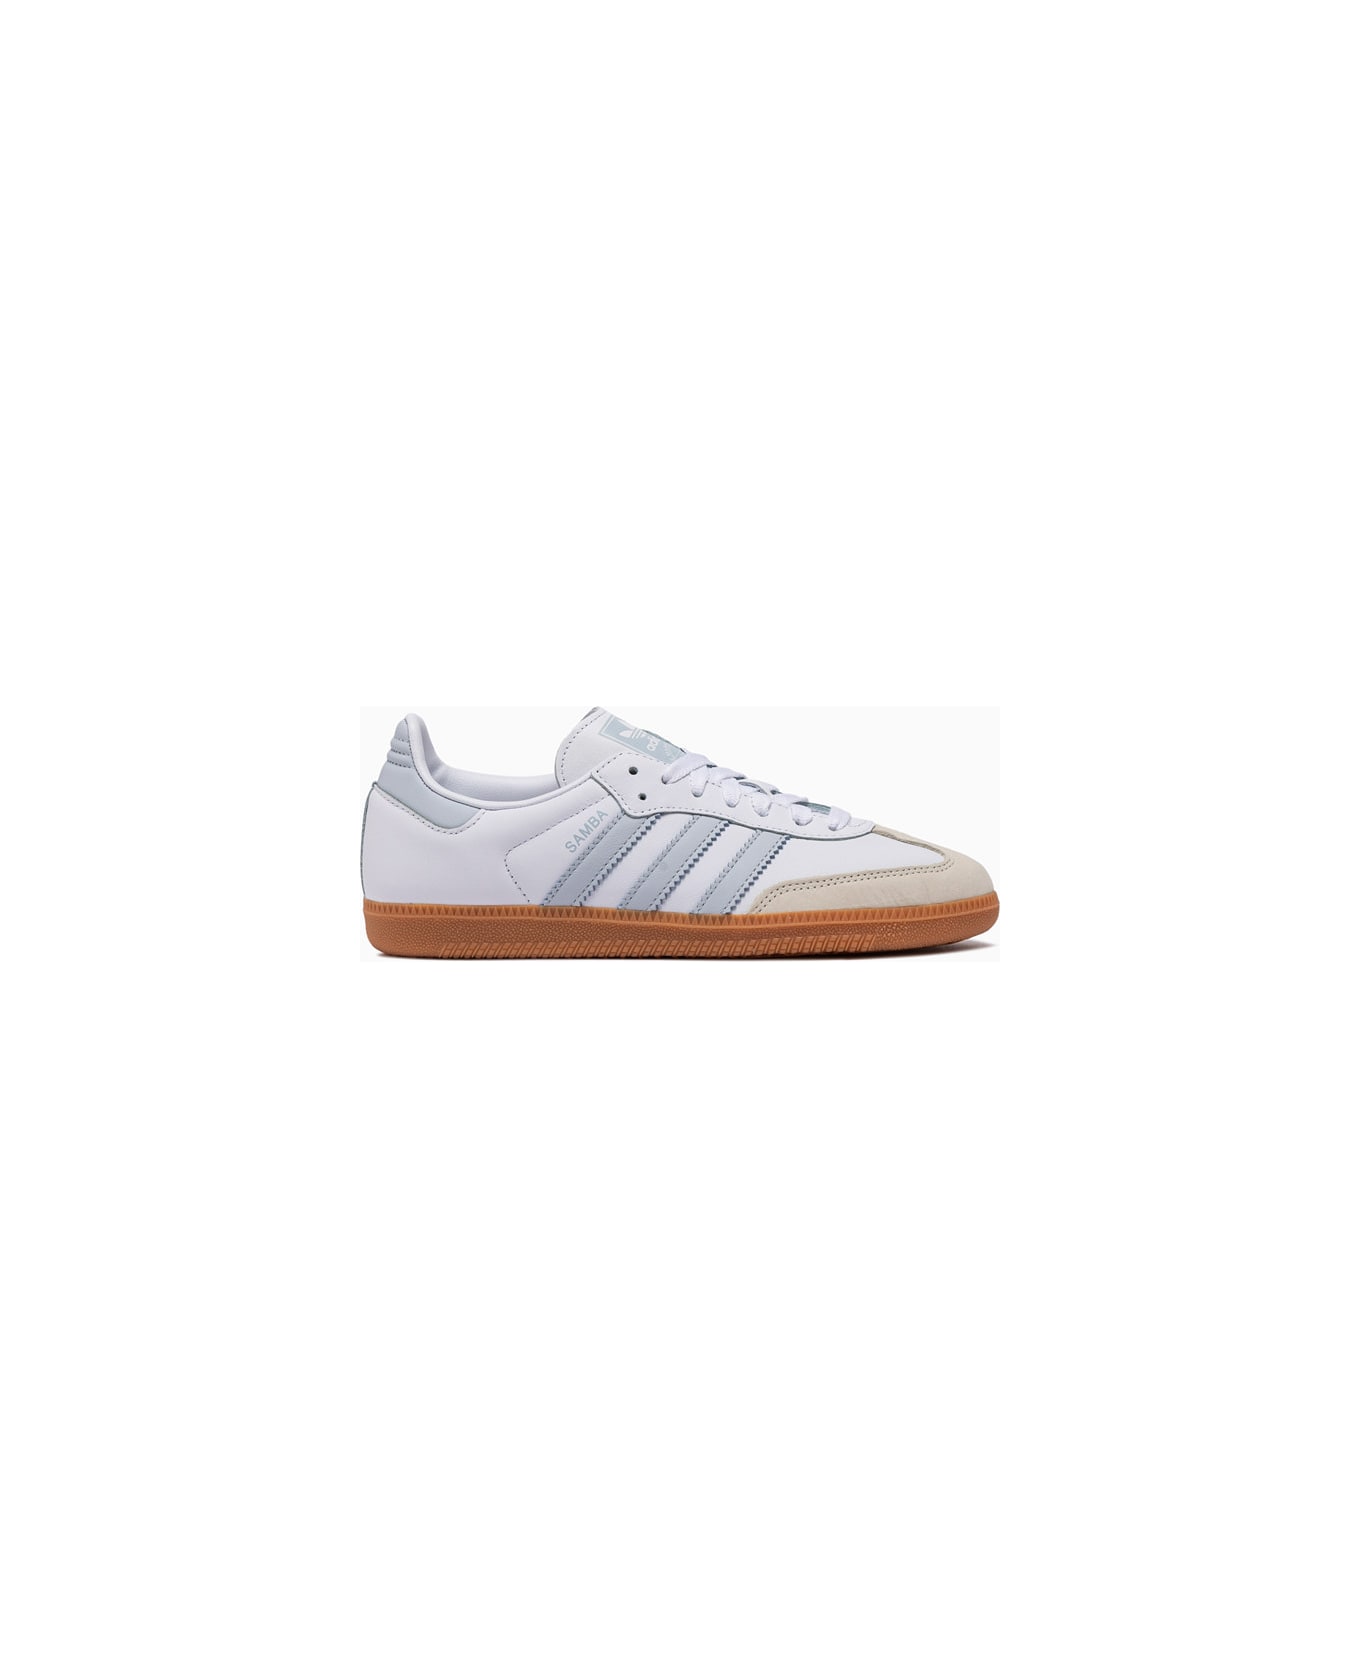 Adidas Samba Og W Sneakers - White